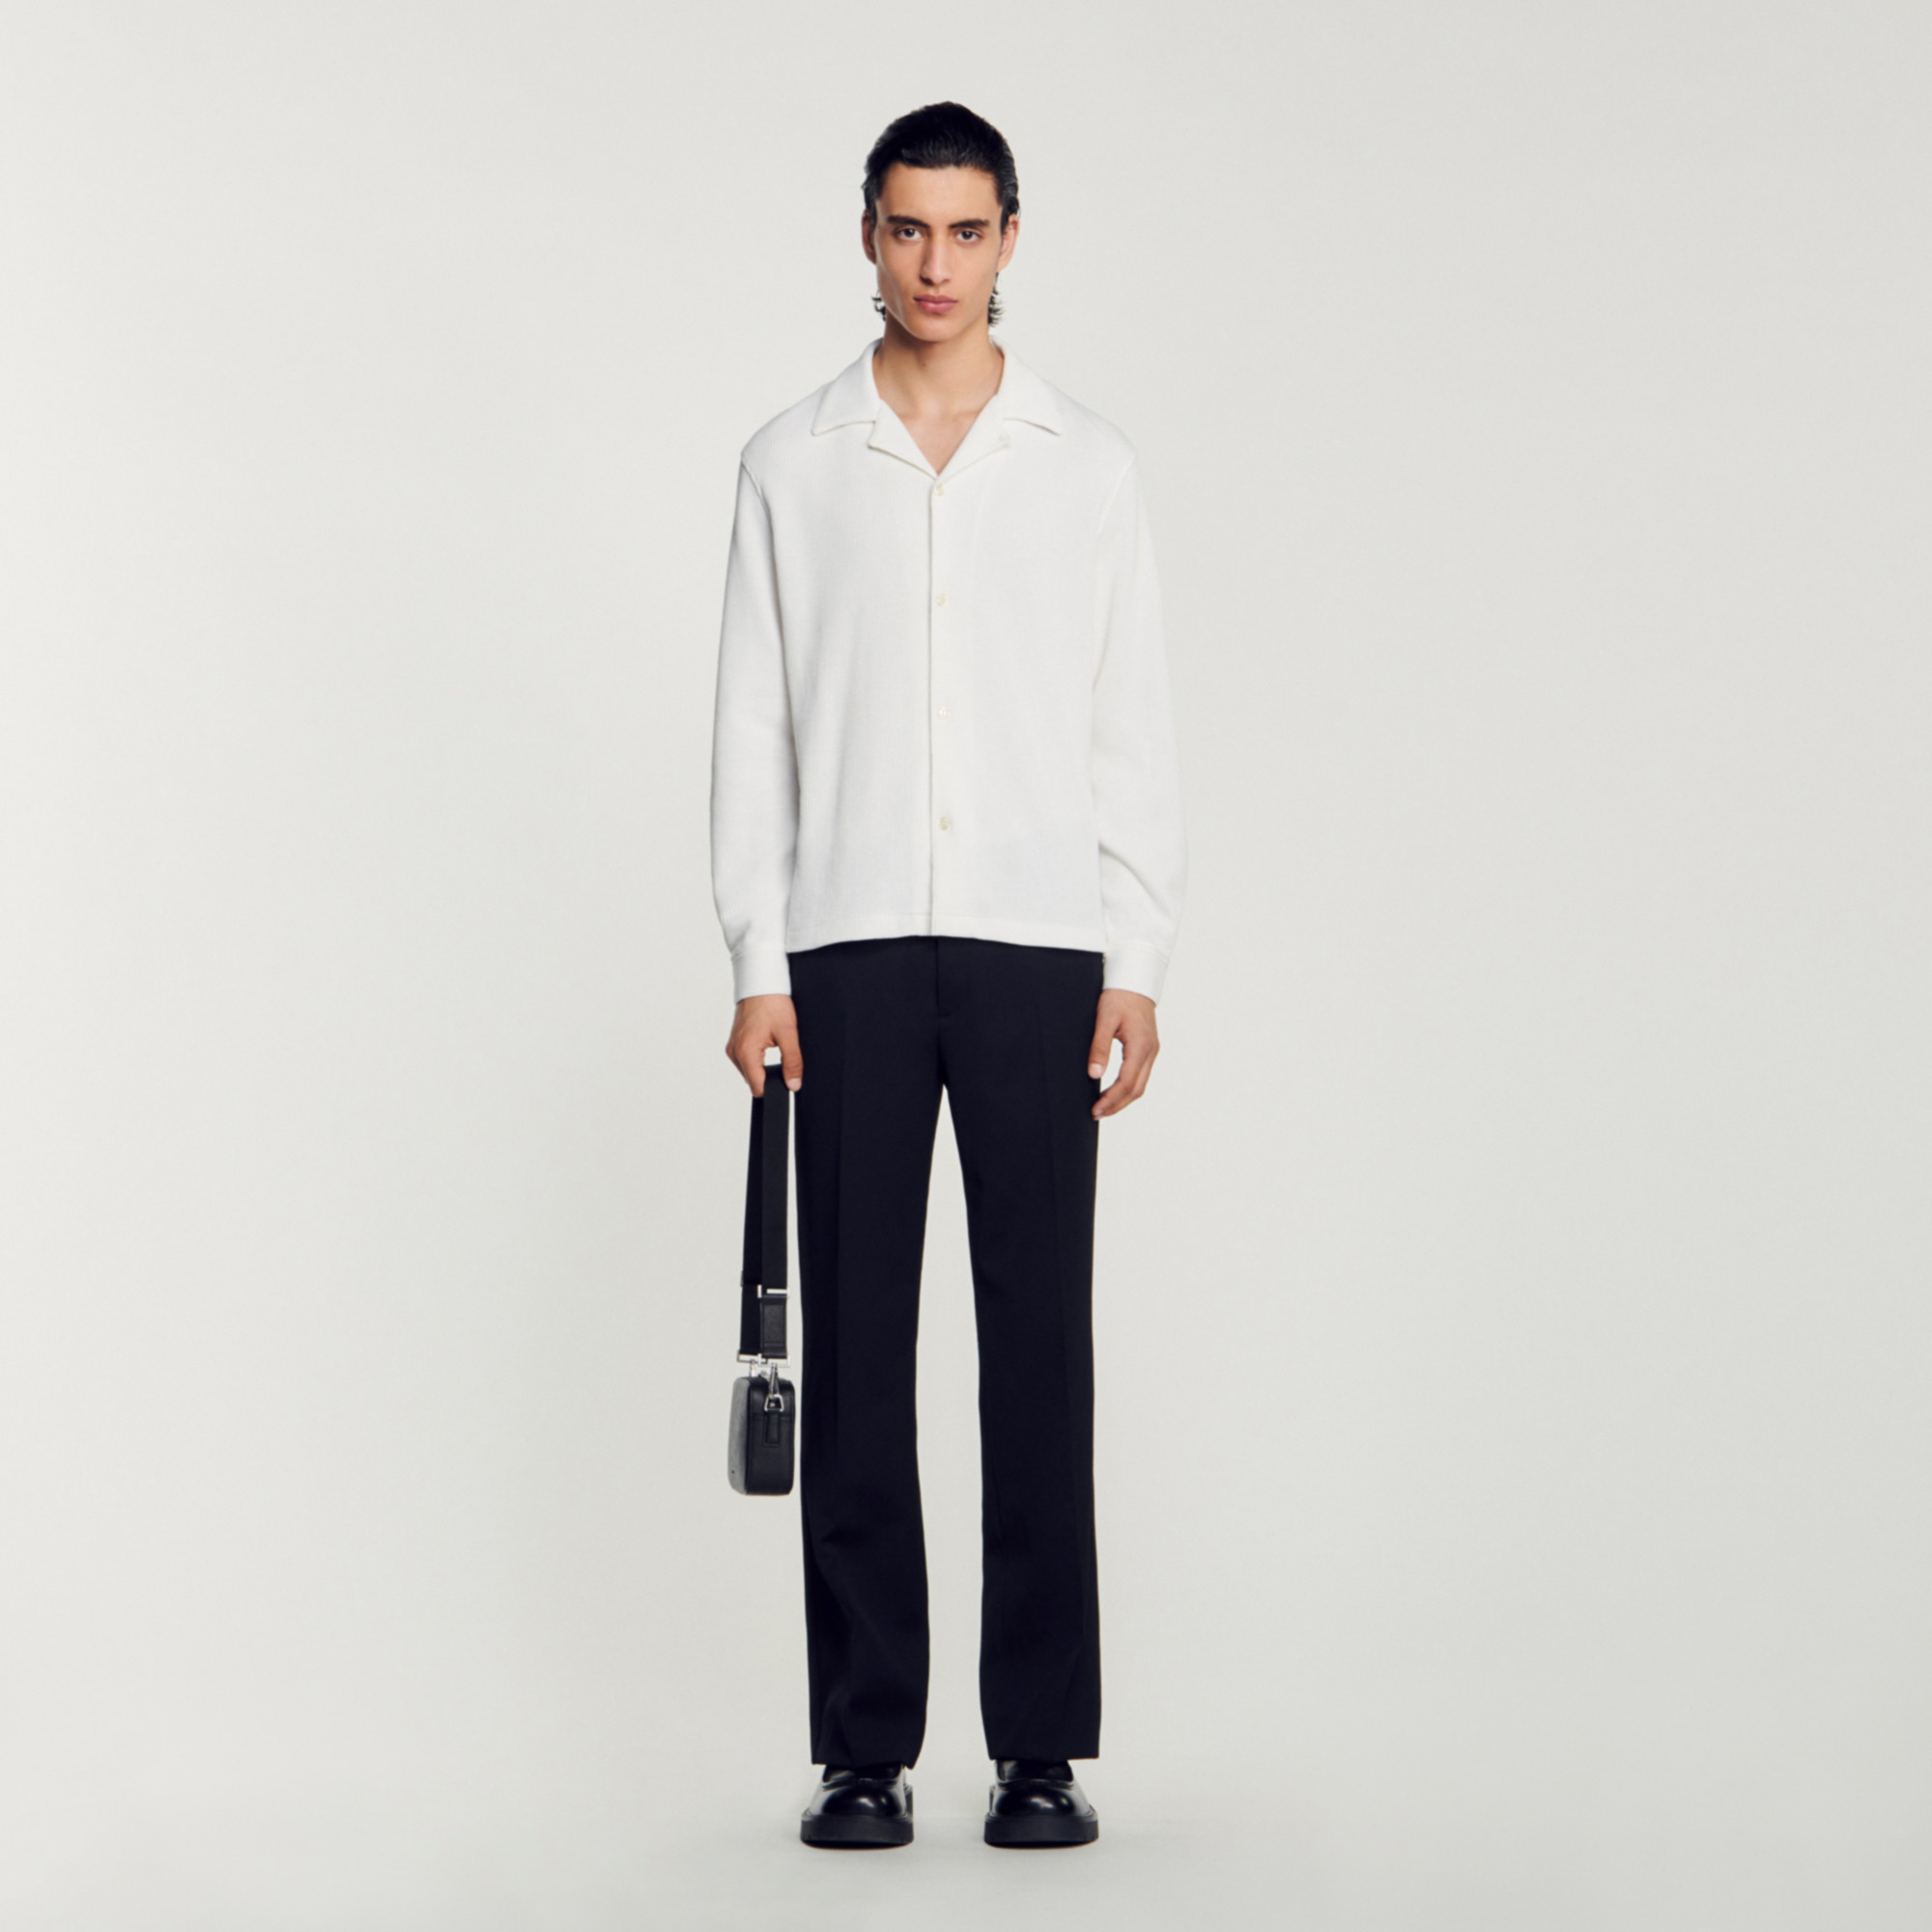 Sandro polyester Long-sleeve shirt